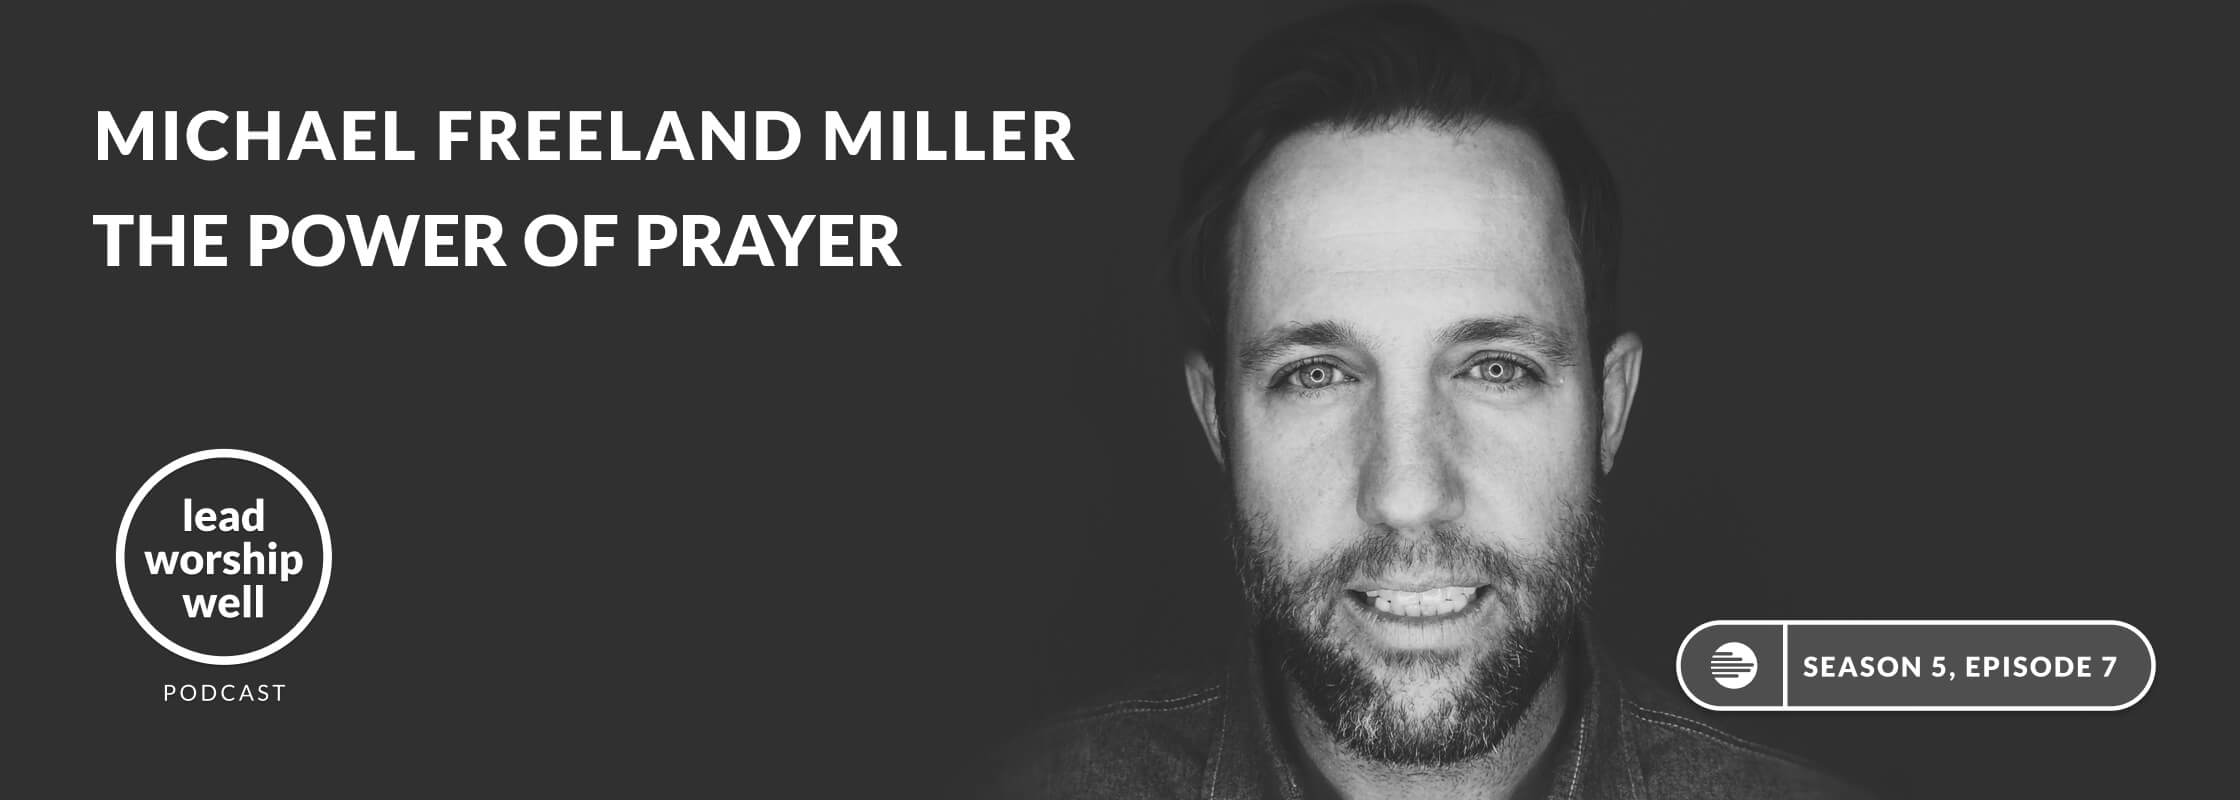 Michael Freeland Miller Podcast Episode